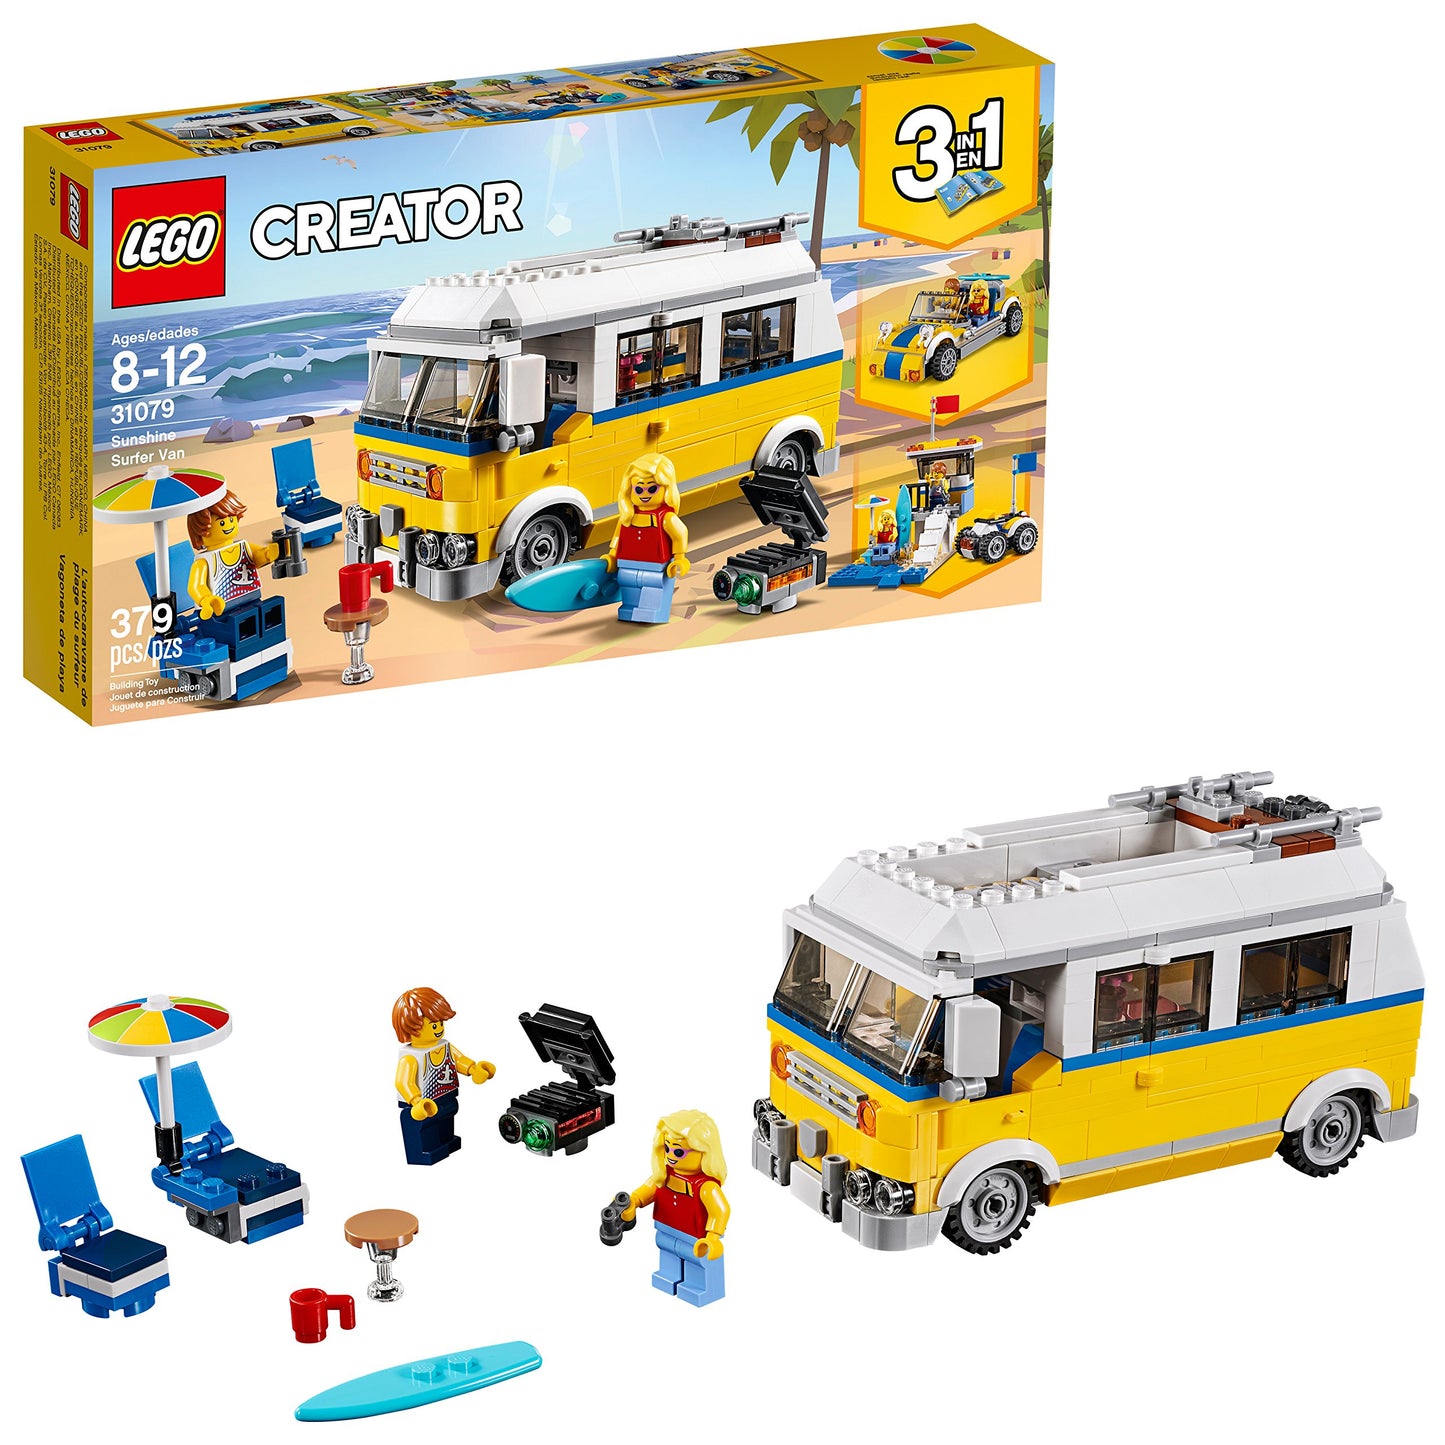 LEGO Creator 3in1 Sunshine Surfer Van 31079